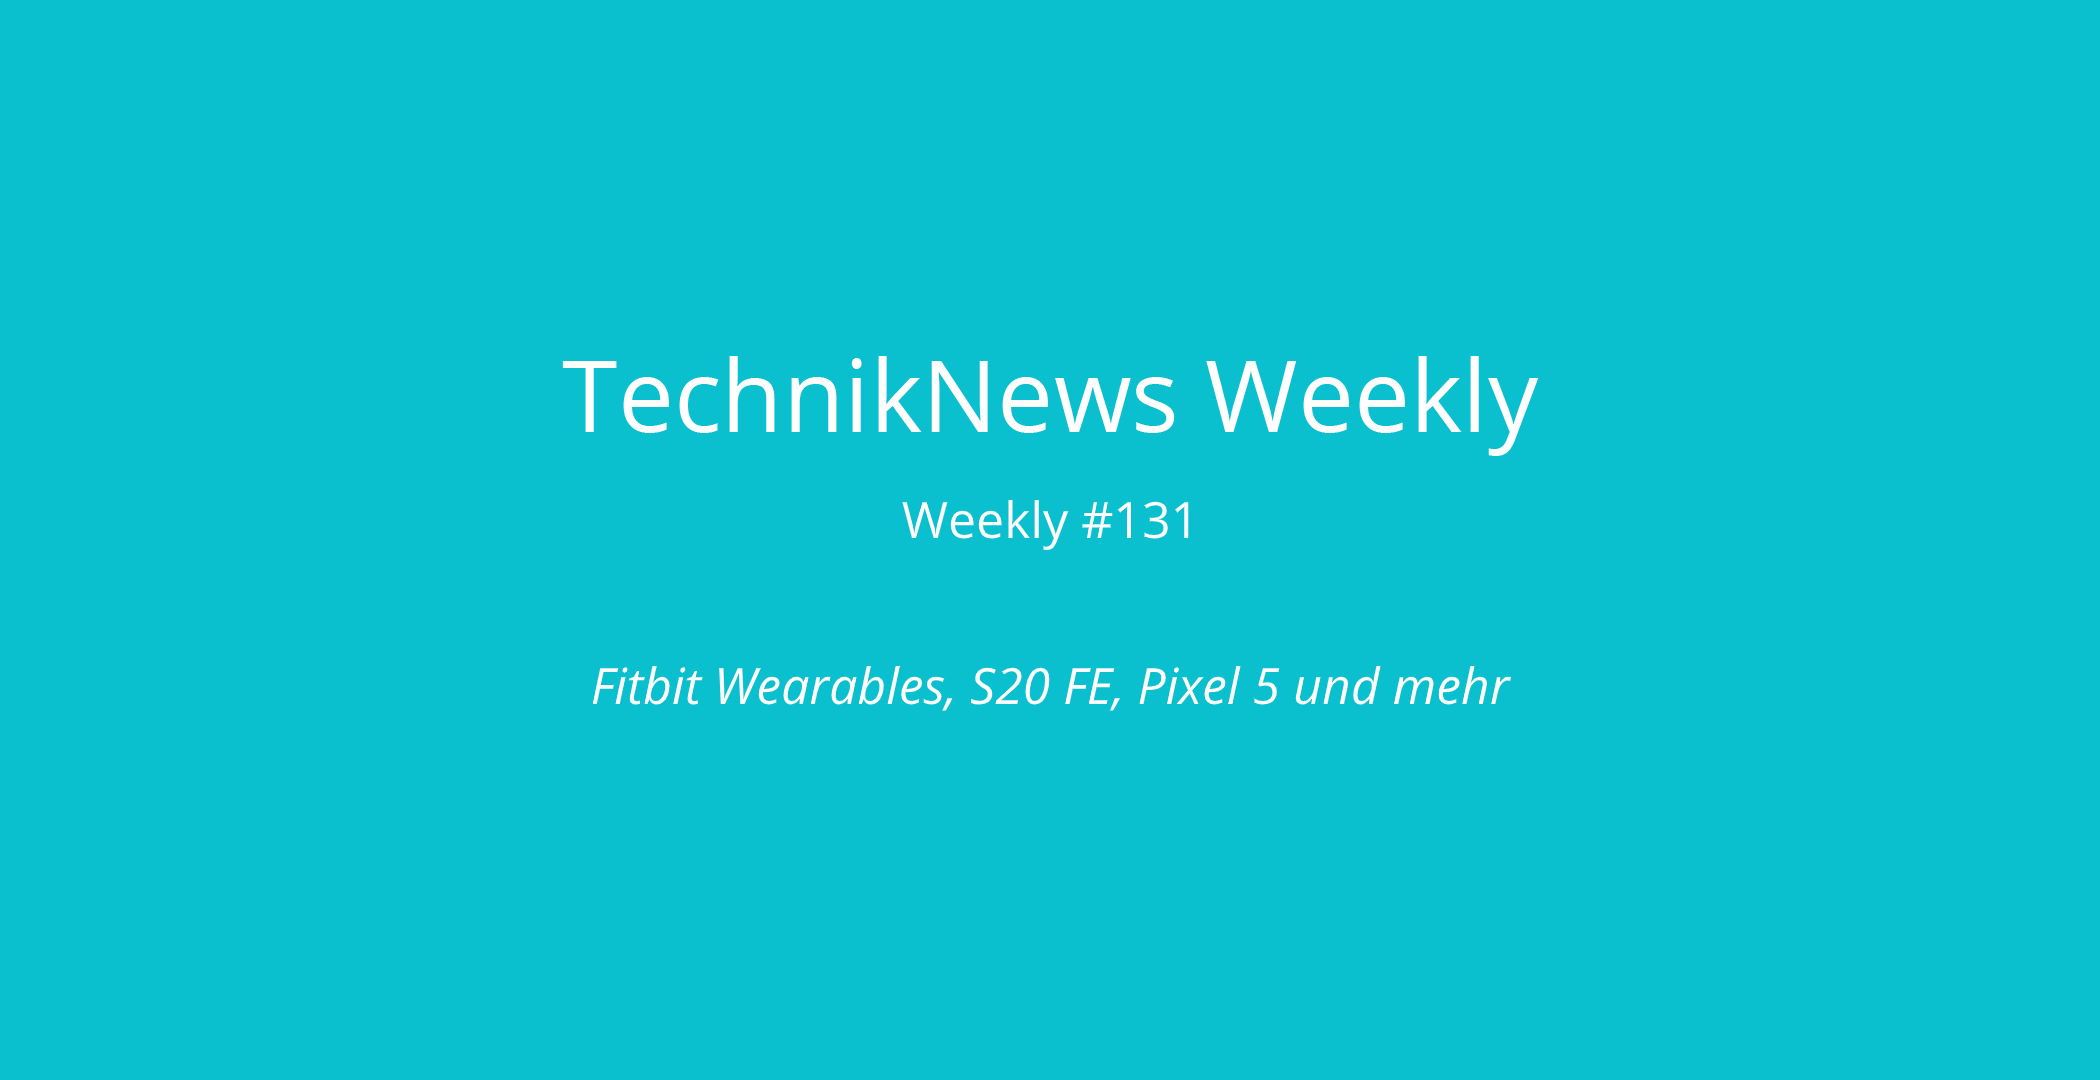 TechnikNews Weekly # 131 featured image